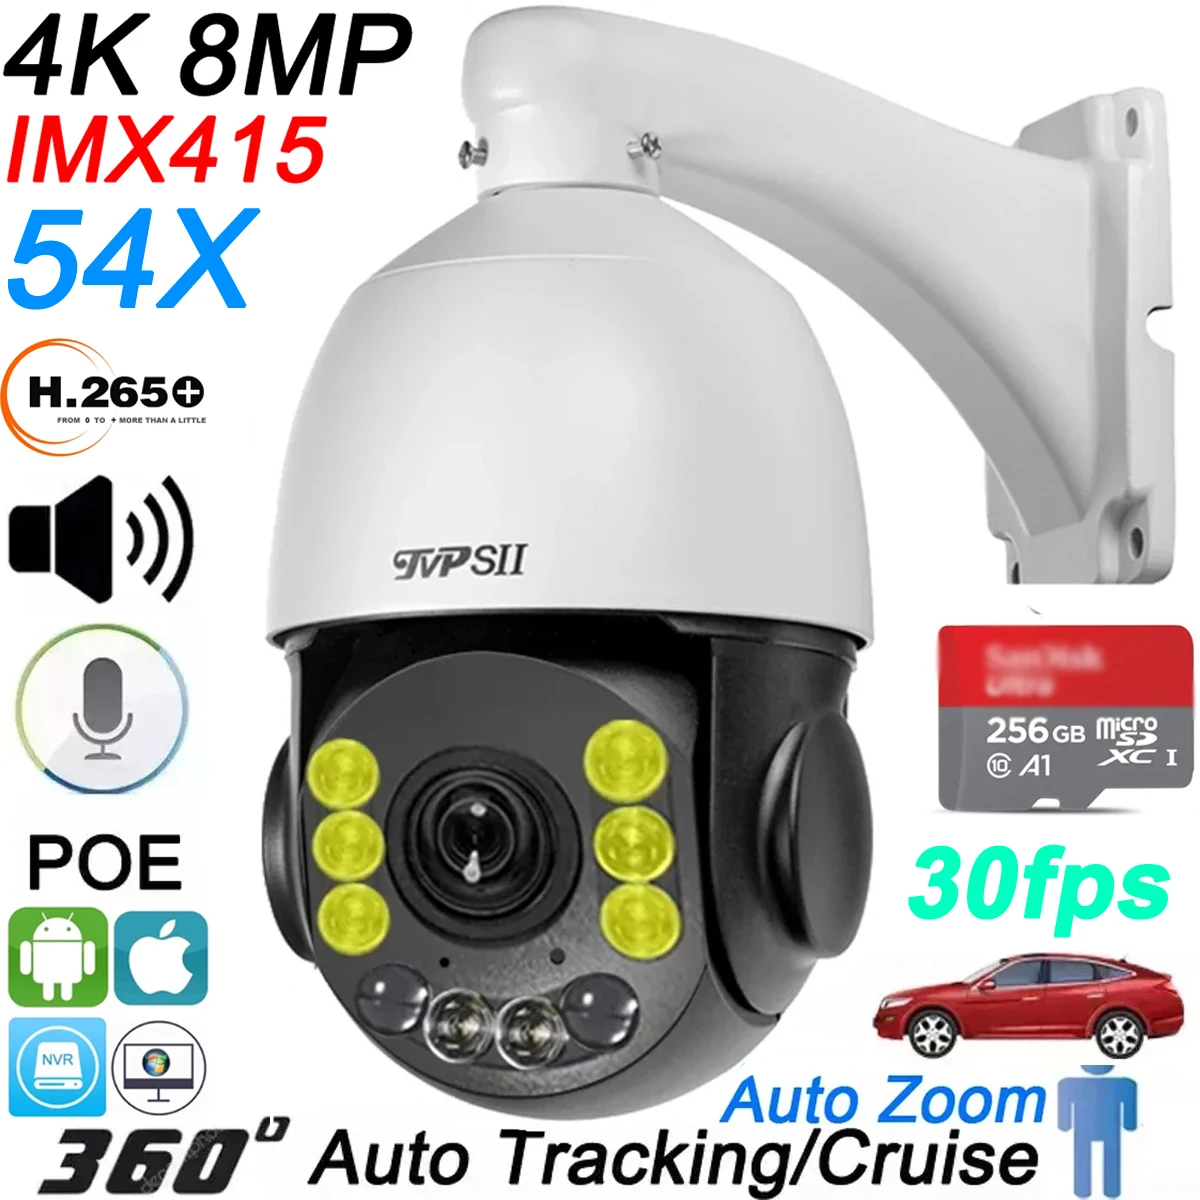 full-color-auto-tracking-30fps-in-tempo-reale-8mp-4k-15x-54x-zoom-ottico-rotazione-audio-outdoor-onvif-poe-ip-ptz-speed-doom-camera